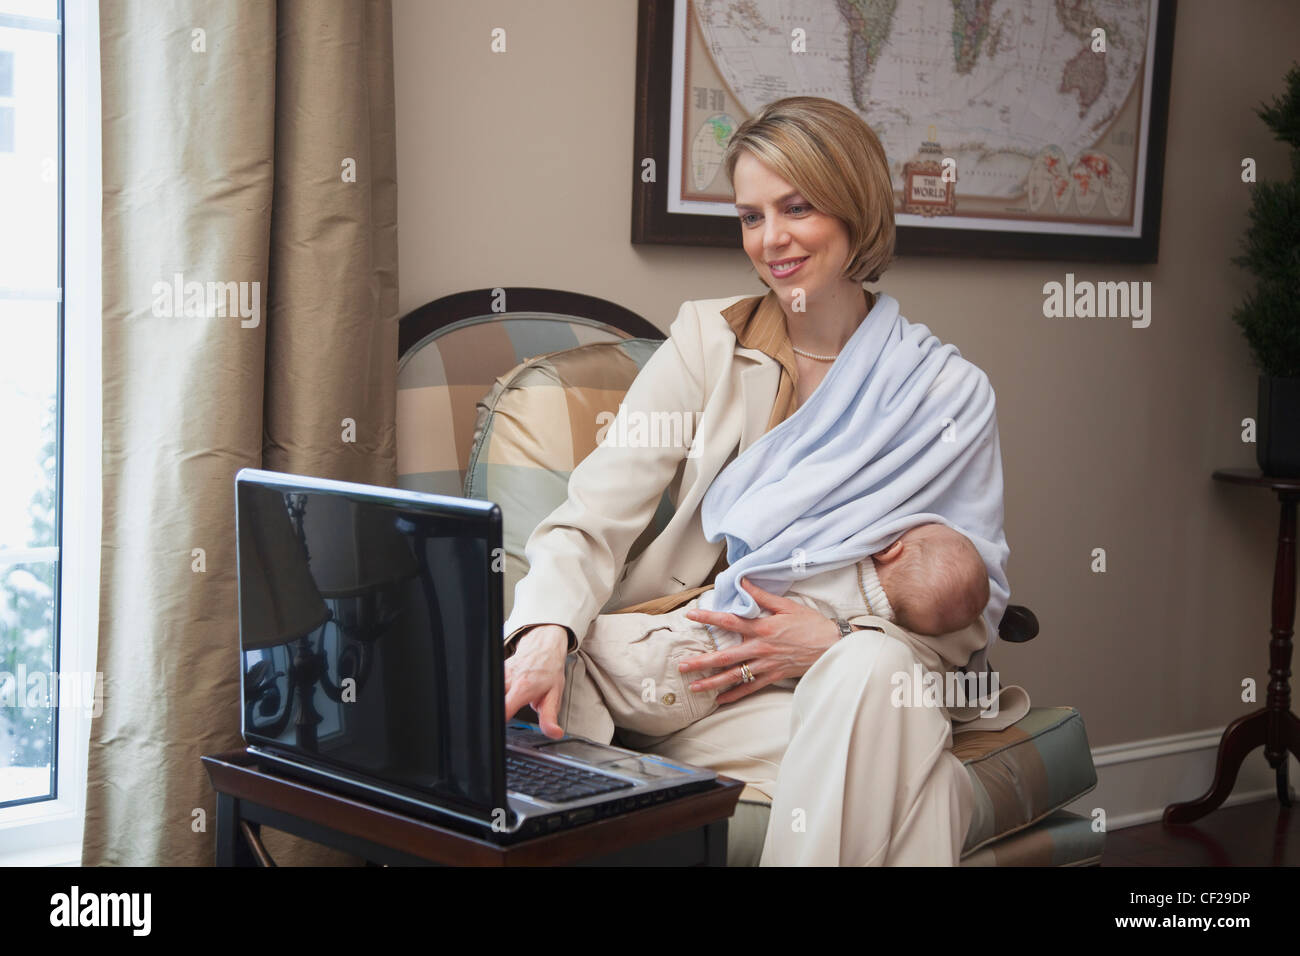 Mother Breastfeeding Baby While On Computer; Jordan Ontario Canada Stock Photo